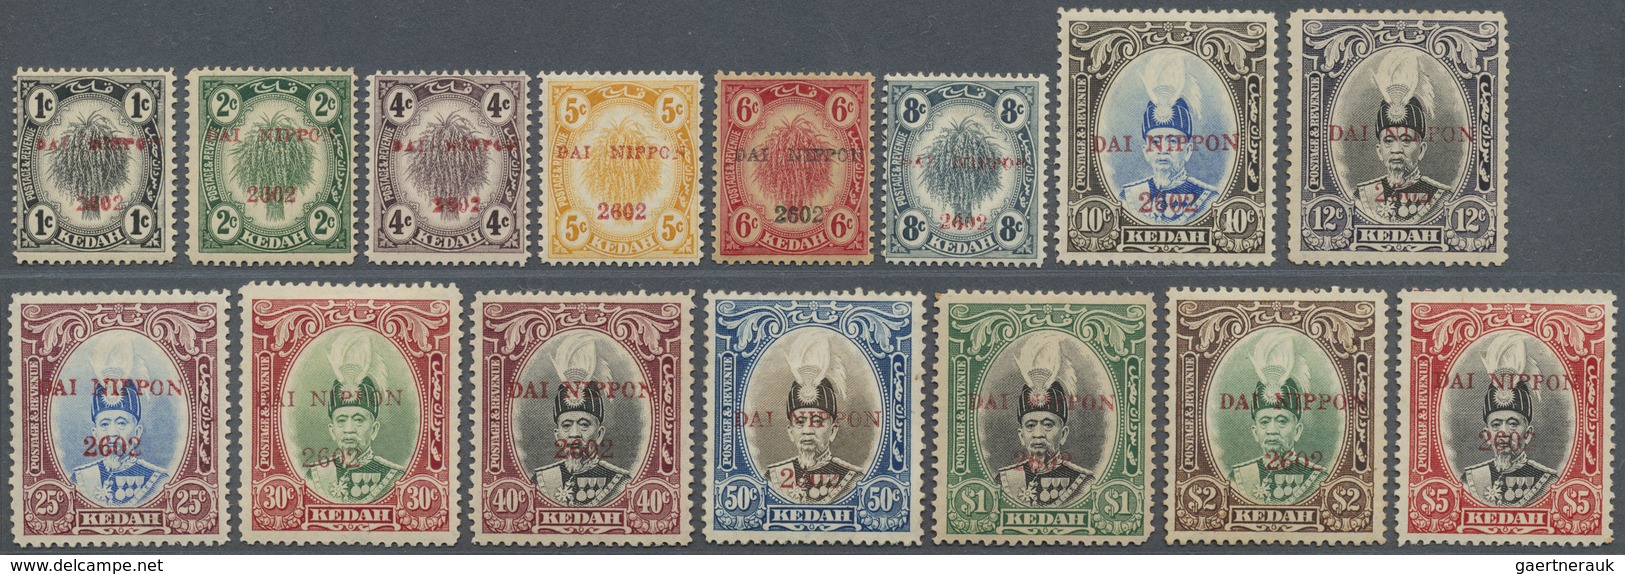 * Malaiische Staaten - Kedah: Japanese Occupation, 1942, "Dai Nippon / 2602" Ovpts., 1 C.-$5, Complete - Kedah